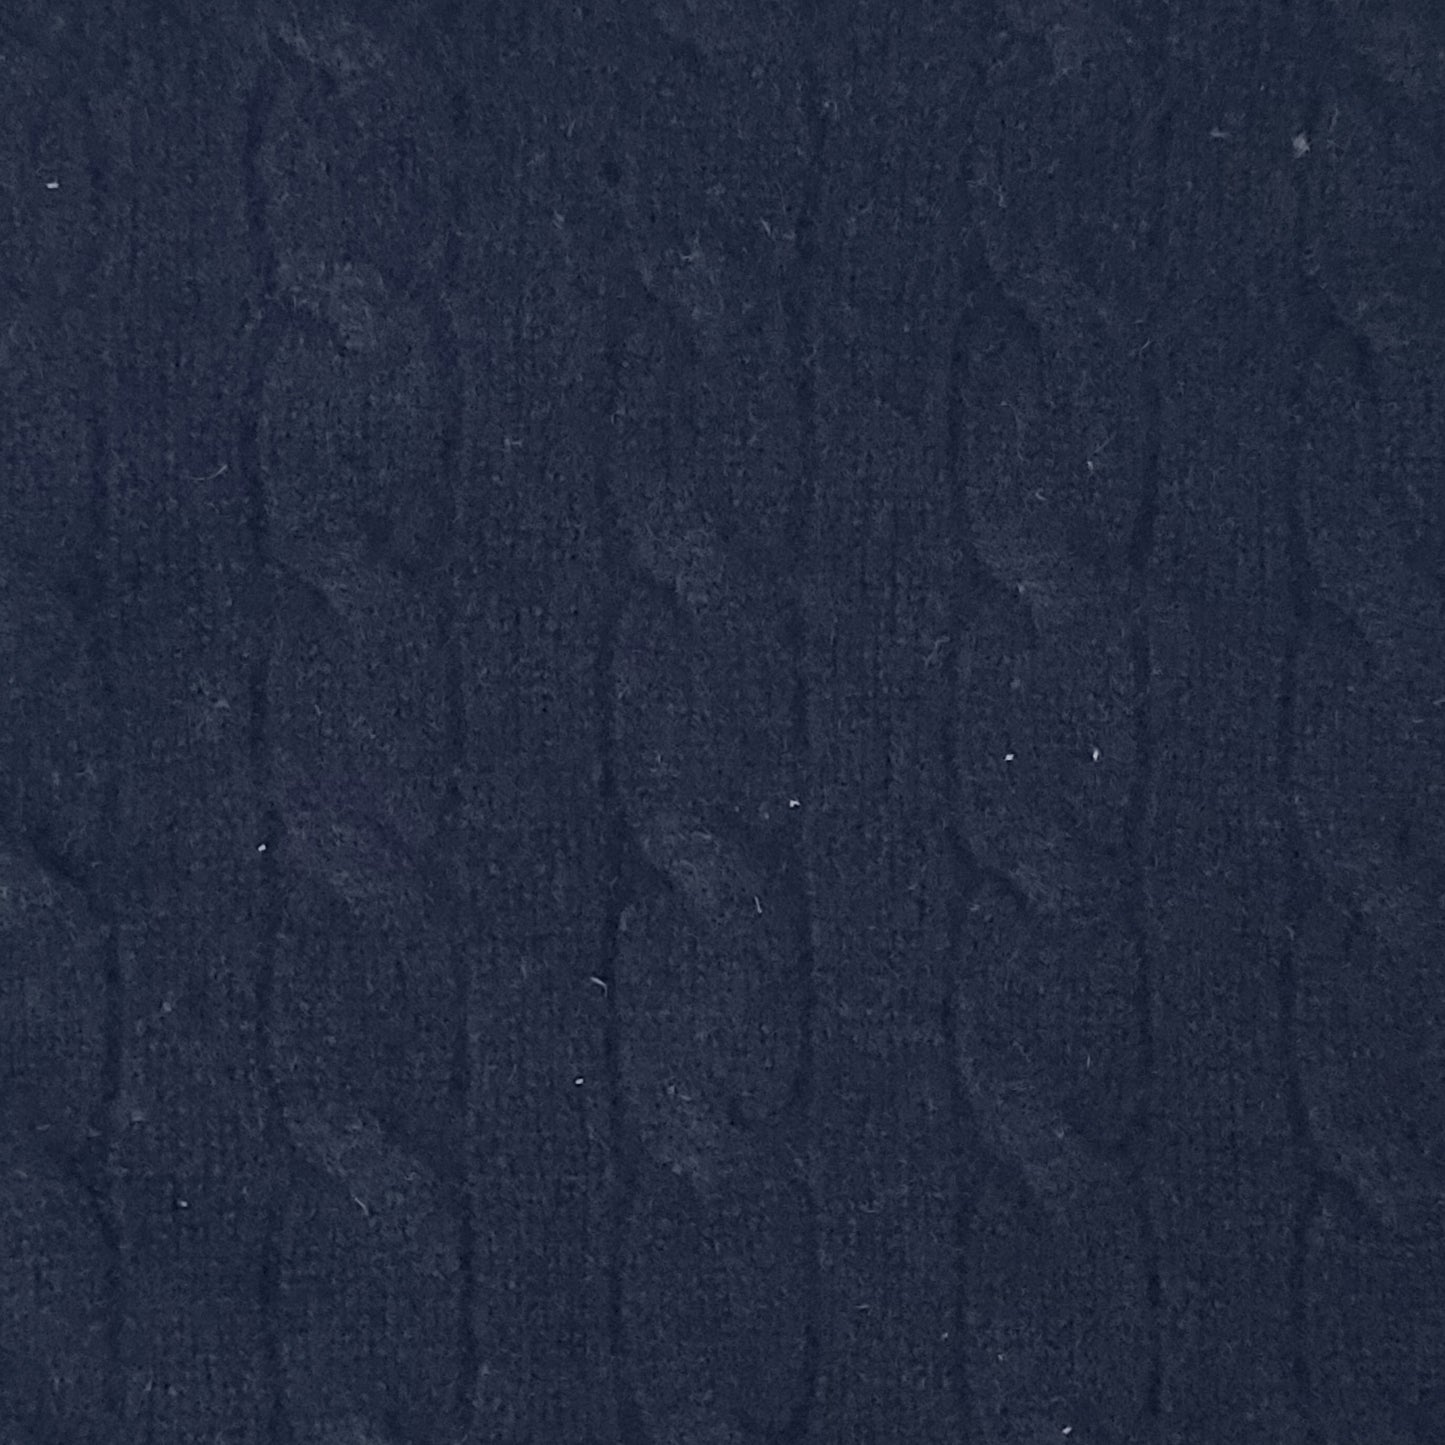 Polo Ralph Lauren 100% Cashmere Navy Blue Sweater